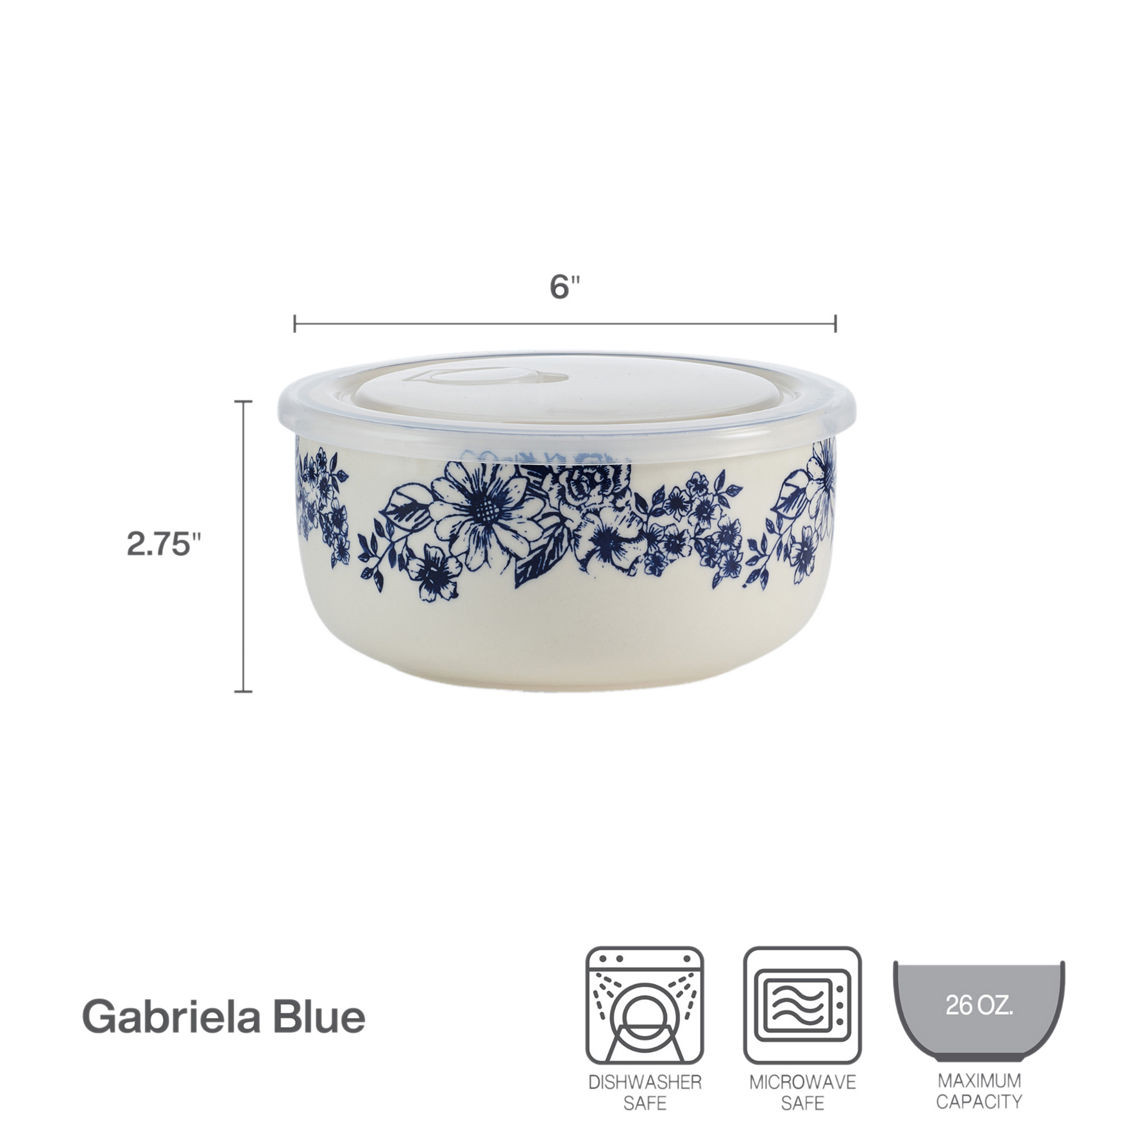 Pfaltzgraff Gabriela Blue Storage Bowl with Lid 2 pc. Set - Image 4 of 4